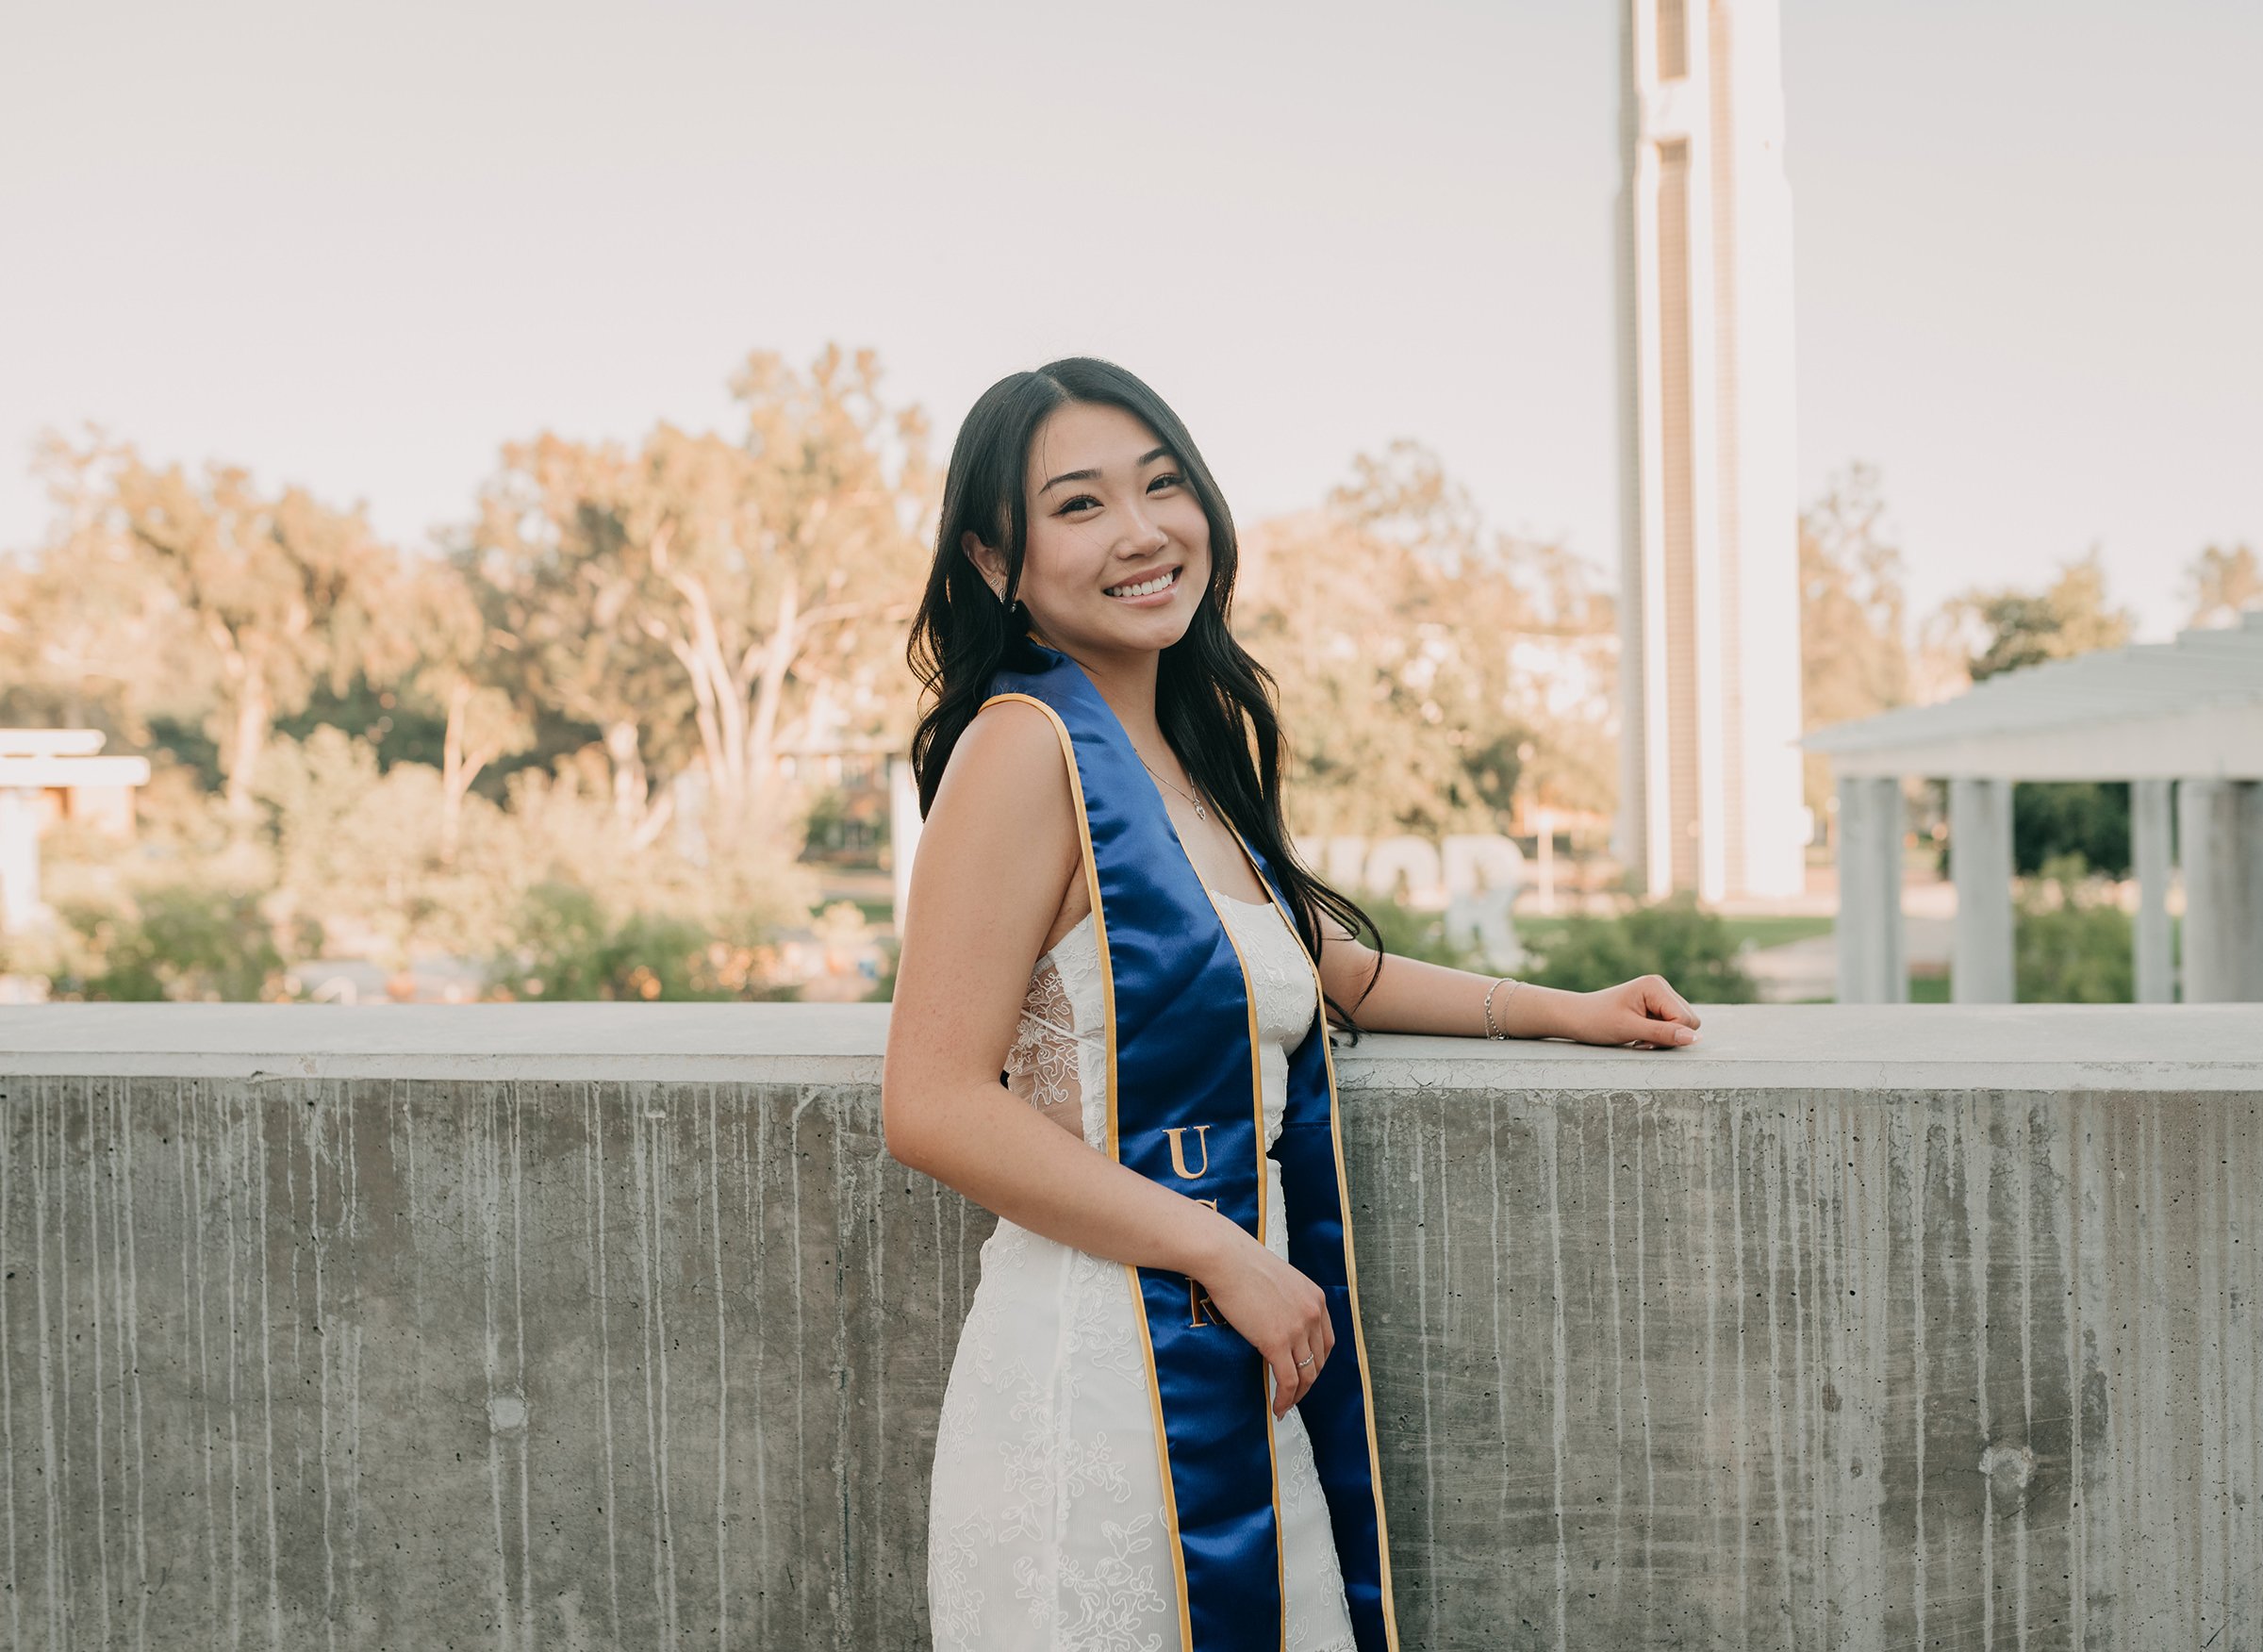 ucr-graduation-portrait-riverside-california-photographer-18.jpg